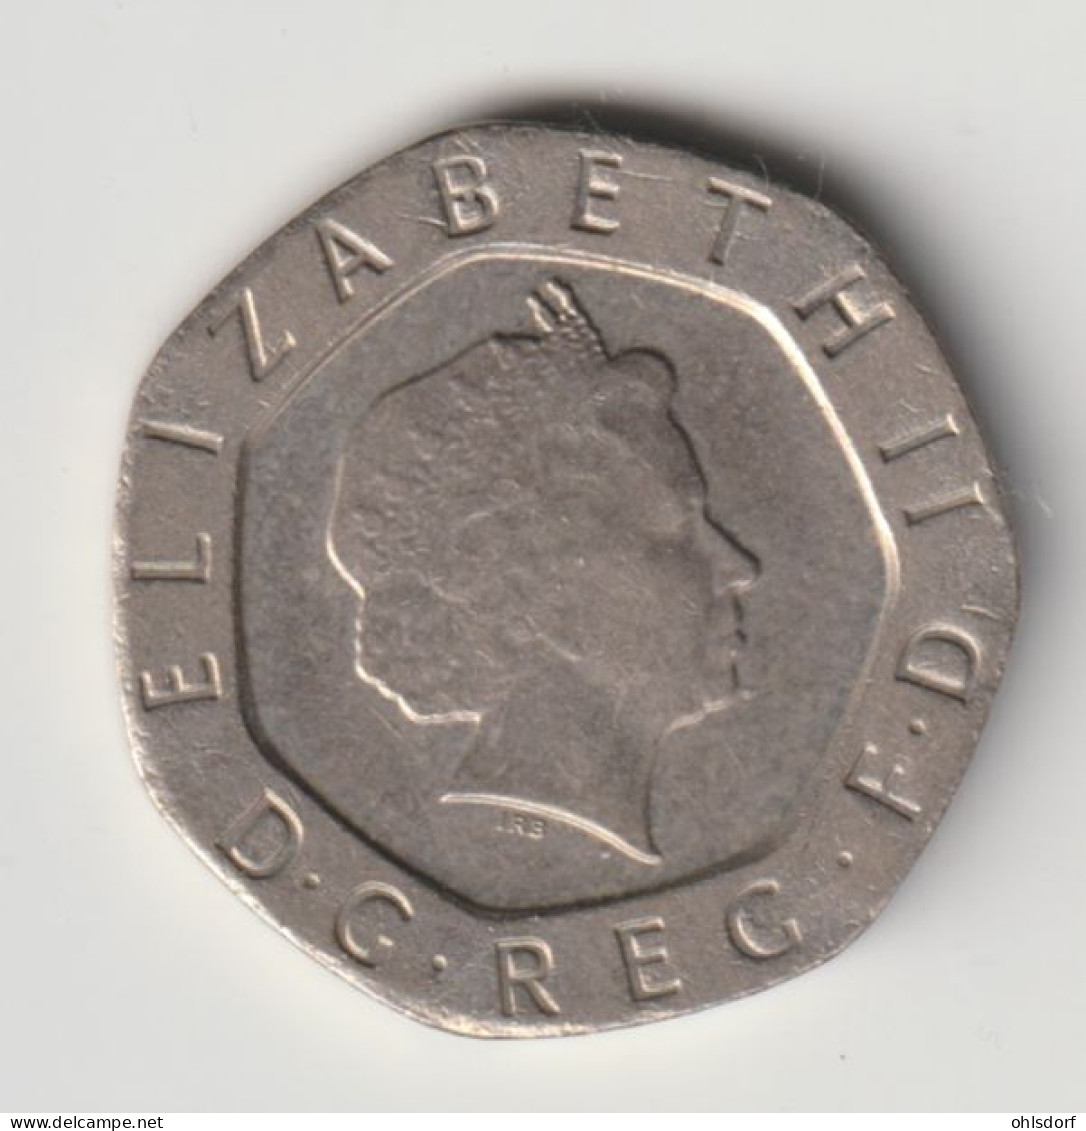 GREAT BRITAIN 1999: 20 Pence, KM 990 - 20 Pence